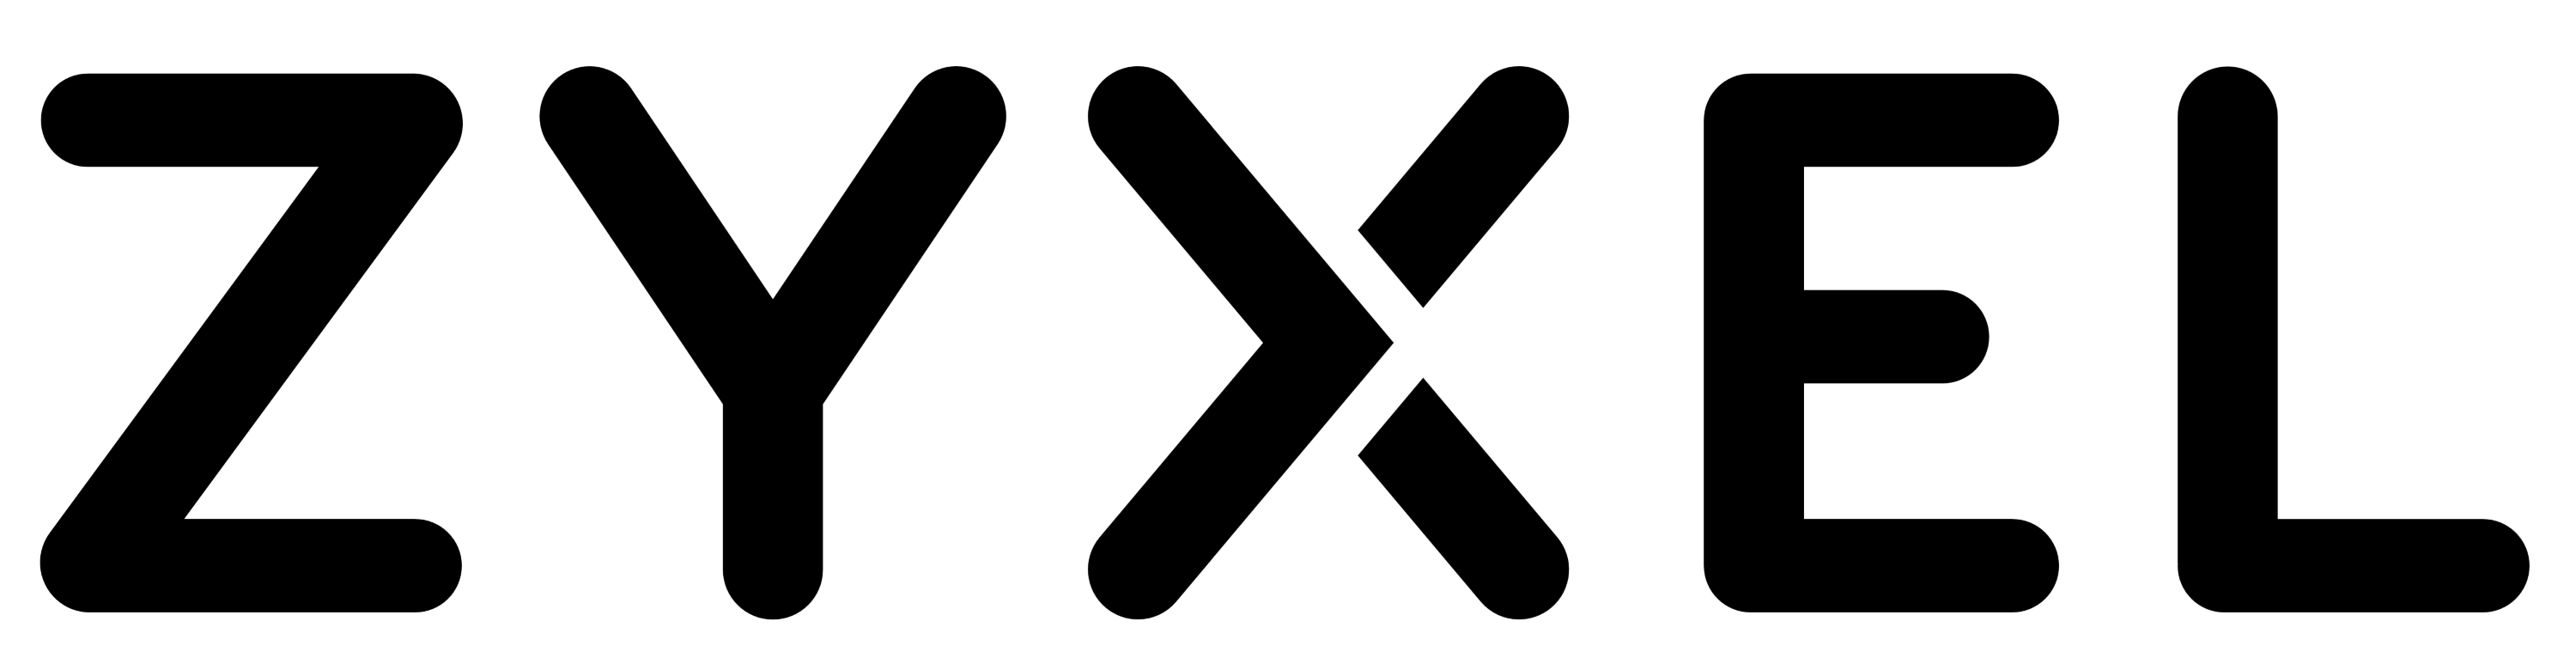 ZyXEL Logo - Zyxel – Logos, brands and logotypes